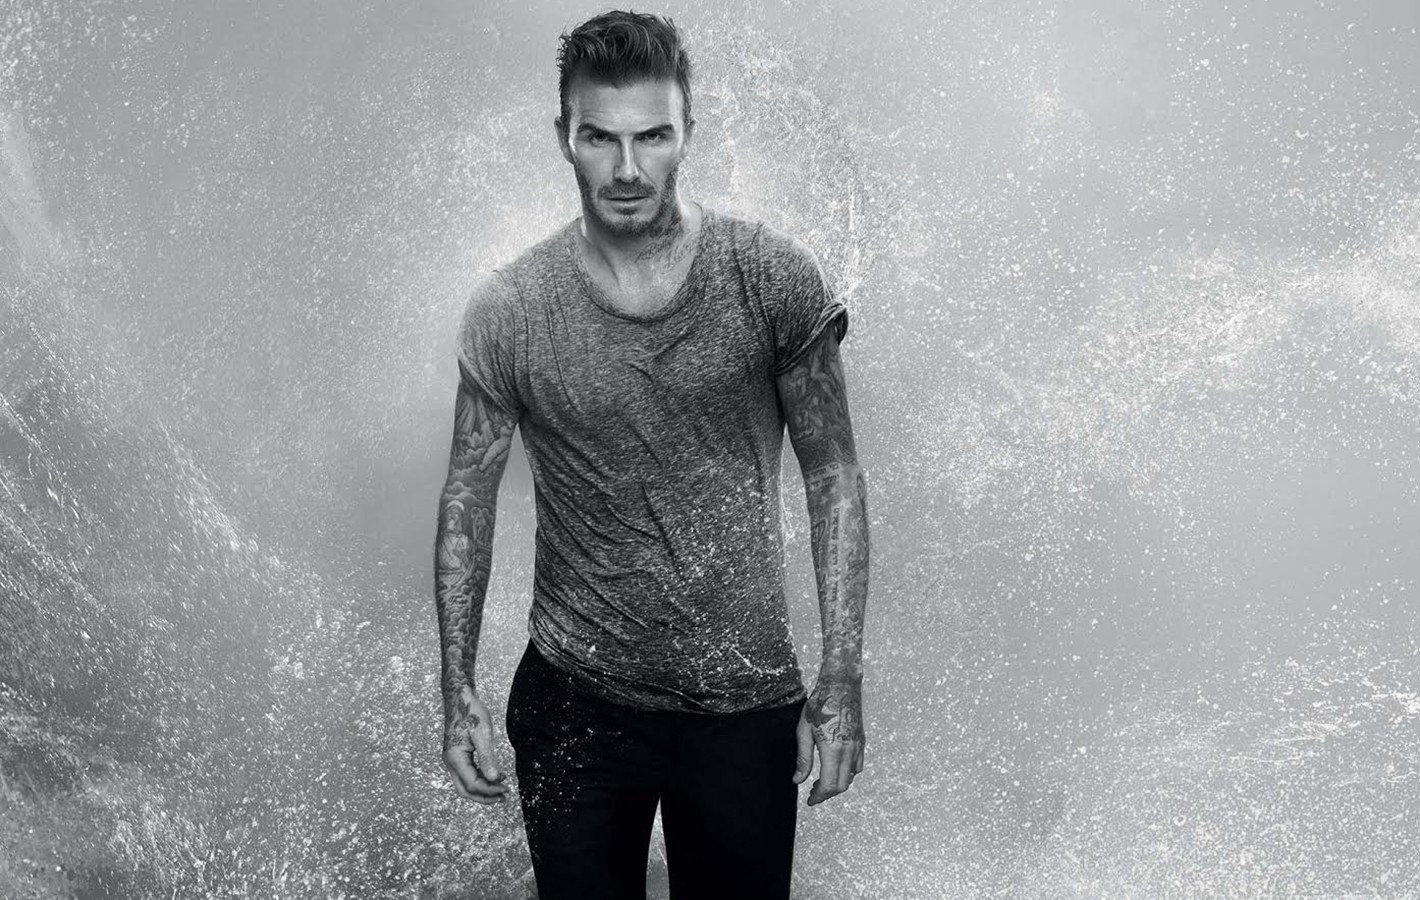 David Beckham nowym ambasadorem marki Biotherm!